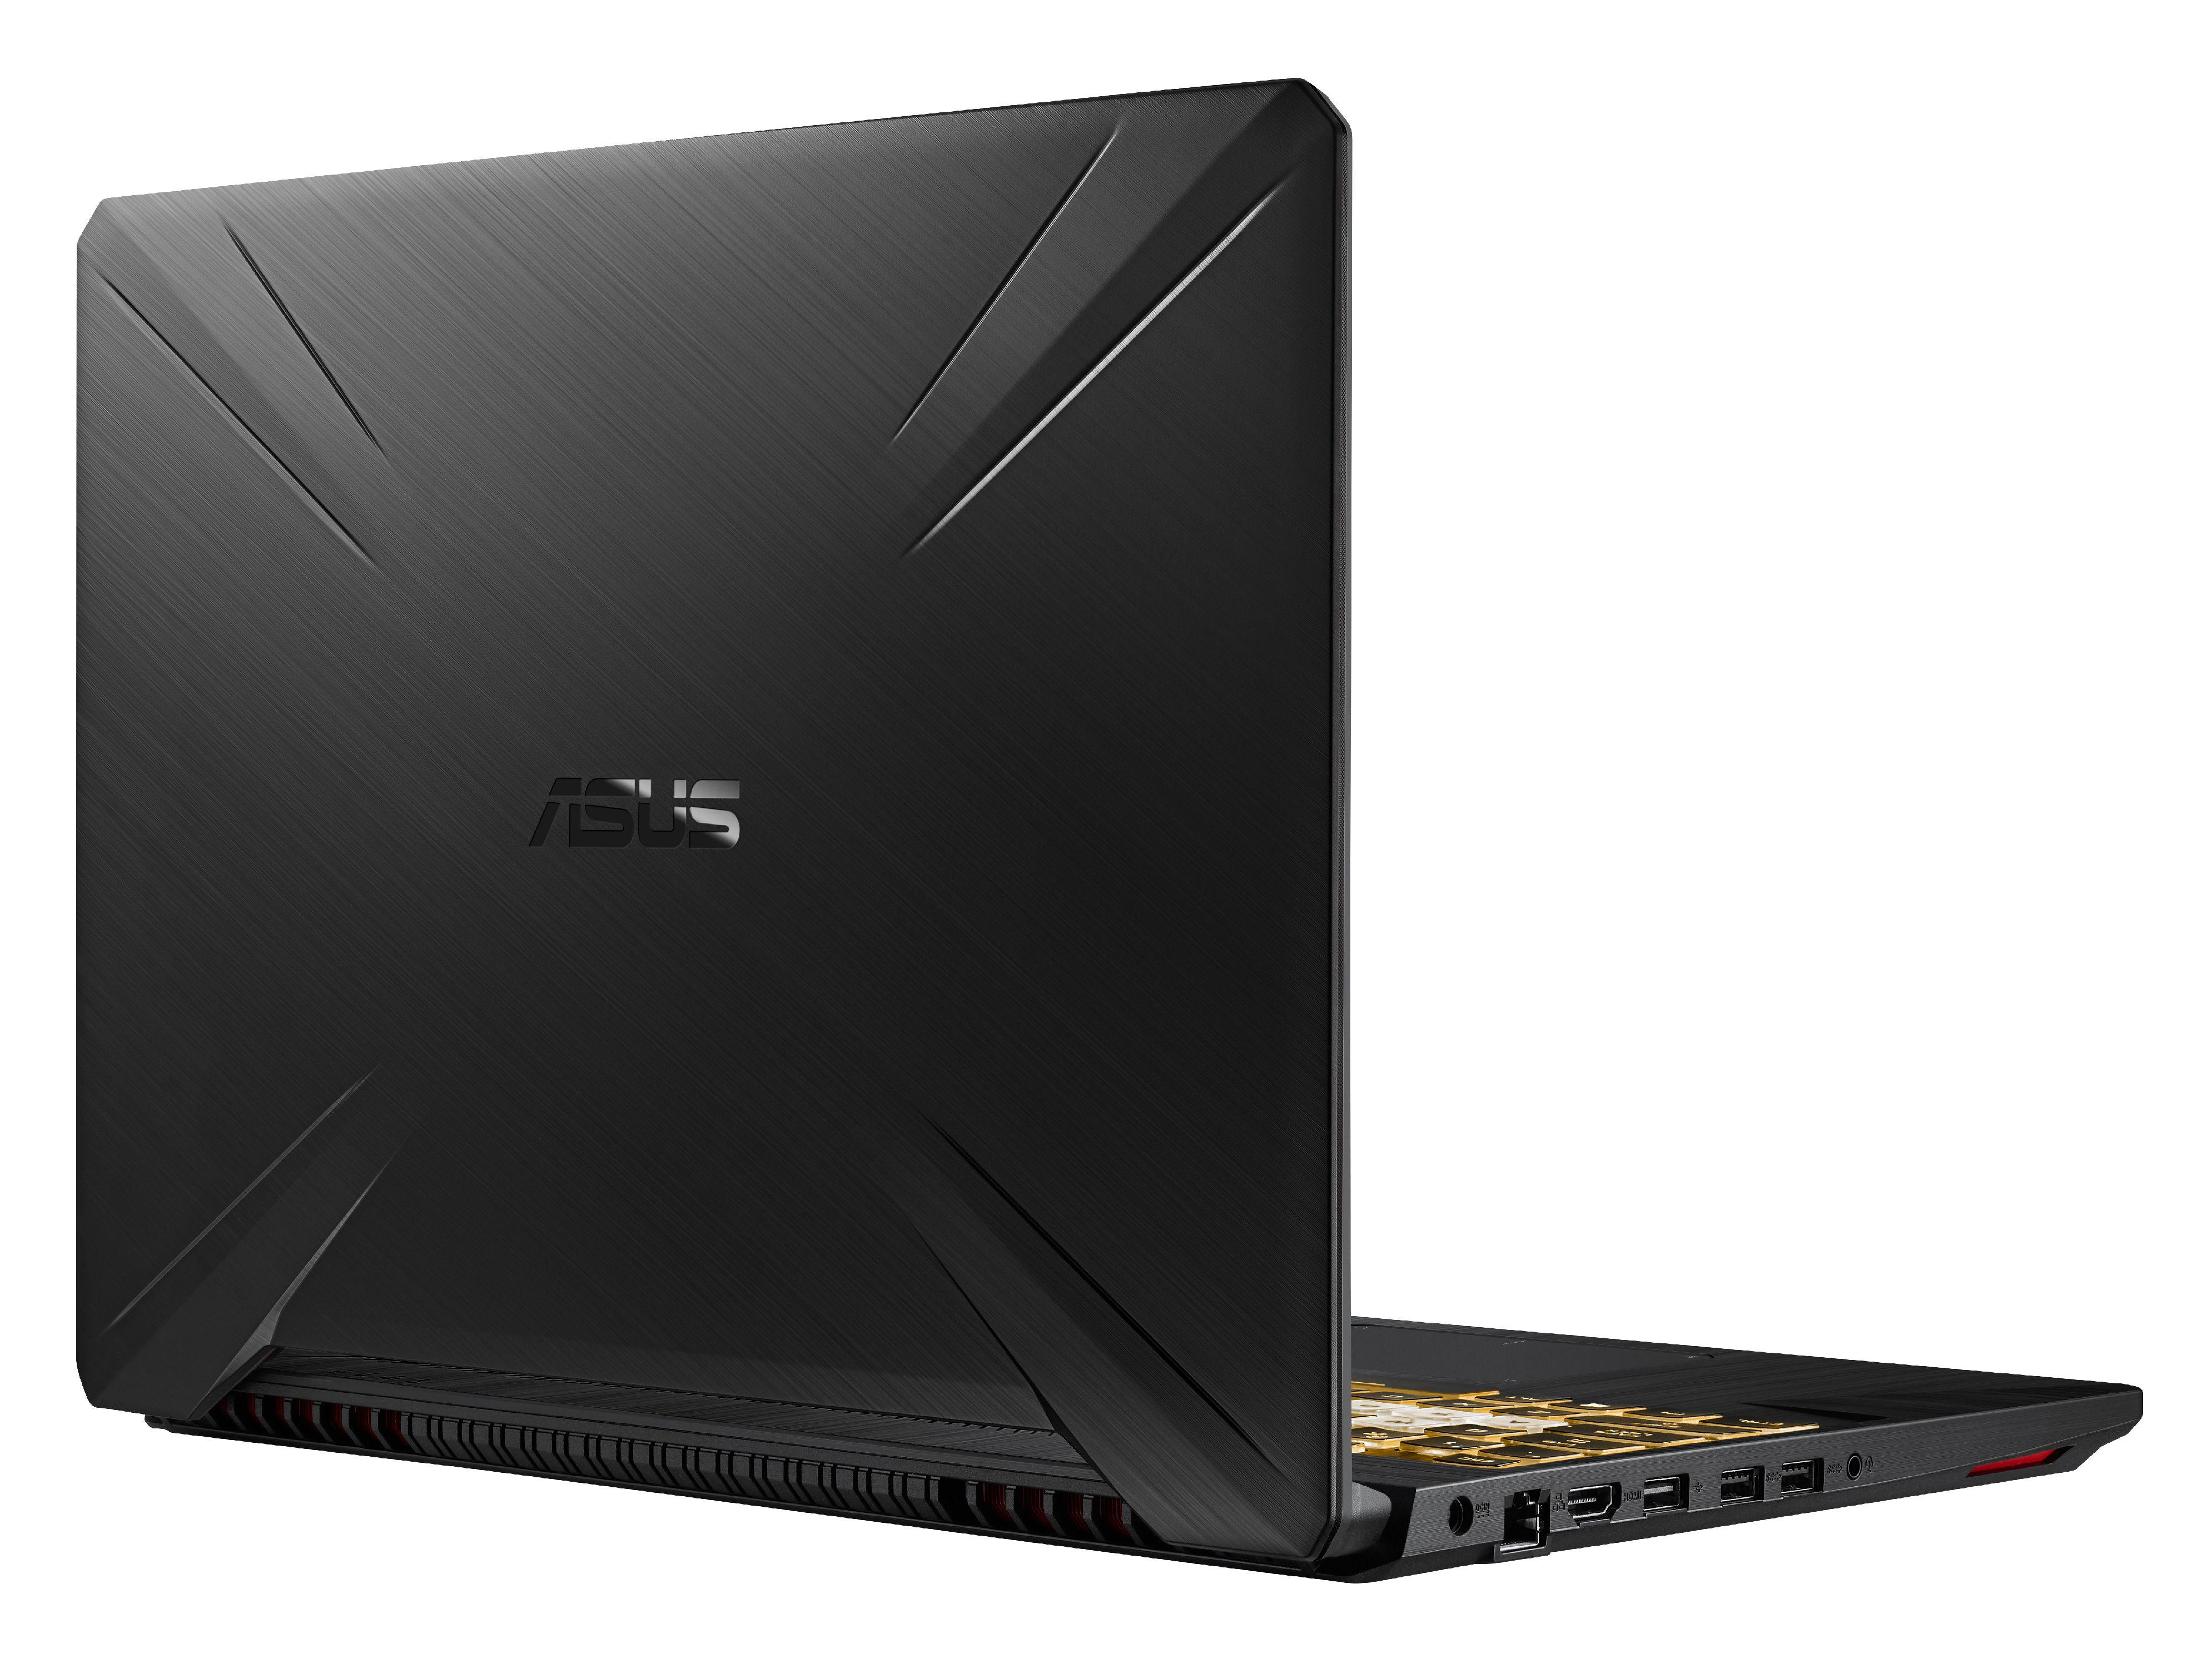 ASUS 15.6" FHD Gaming Laptop, AMD Ryzen 7 R7-3750H, 8GB RAM, NVIDIA GeForce GTX 1650 4GB, 256GB SSD, Windows 10 Home, Black, FX505DT-WB72 - image 5 of 6